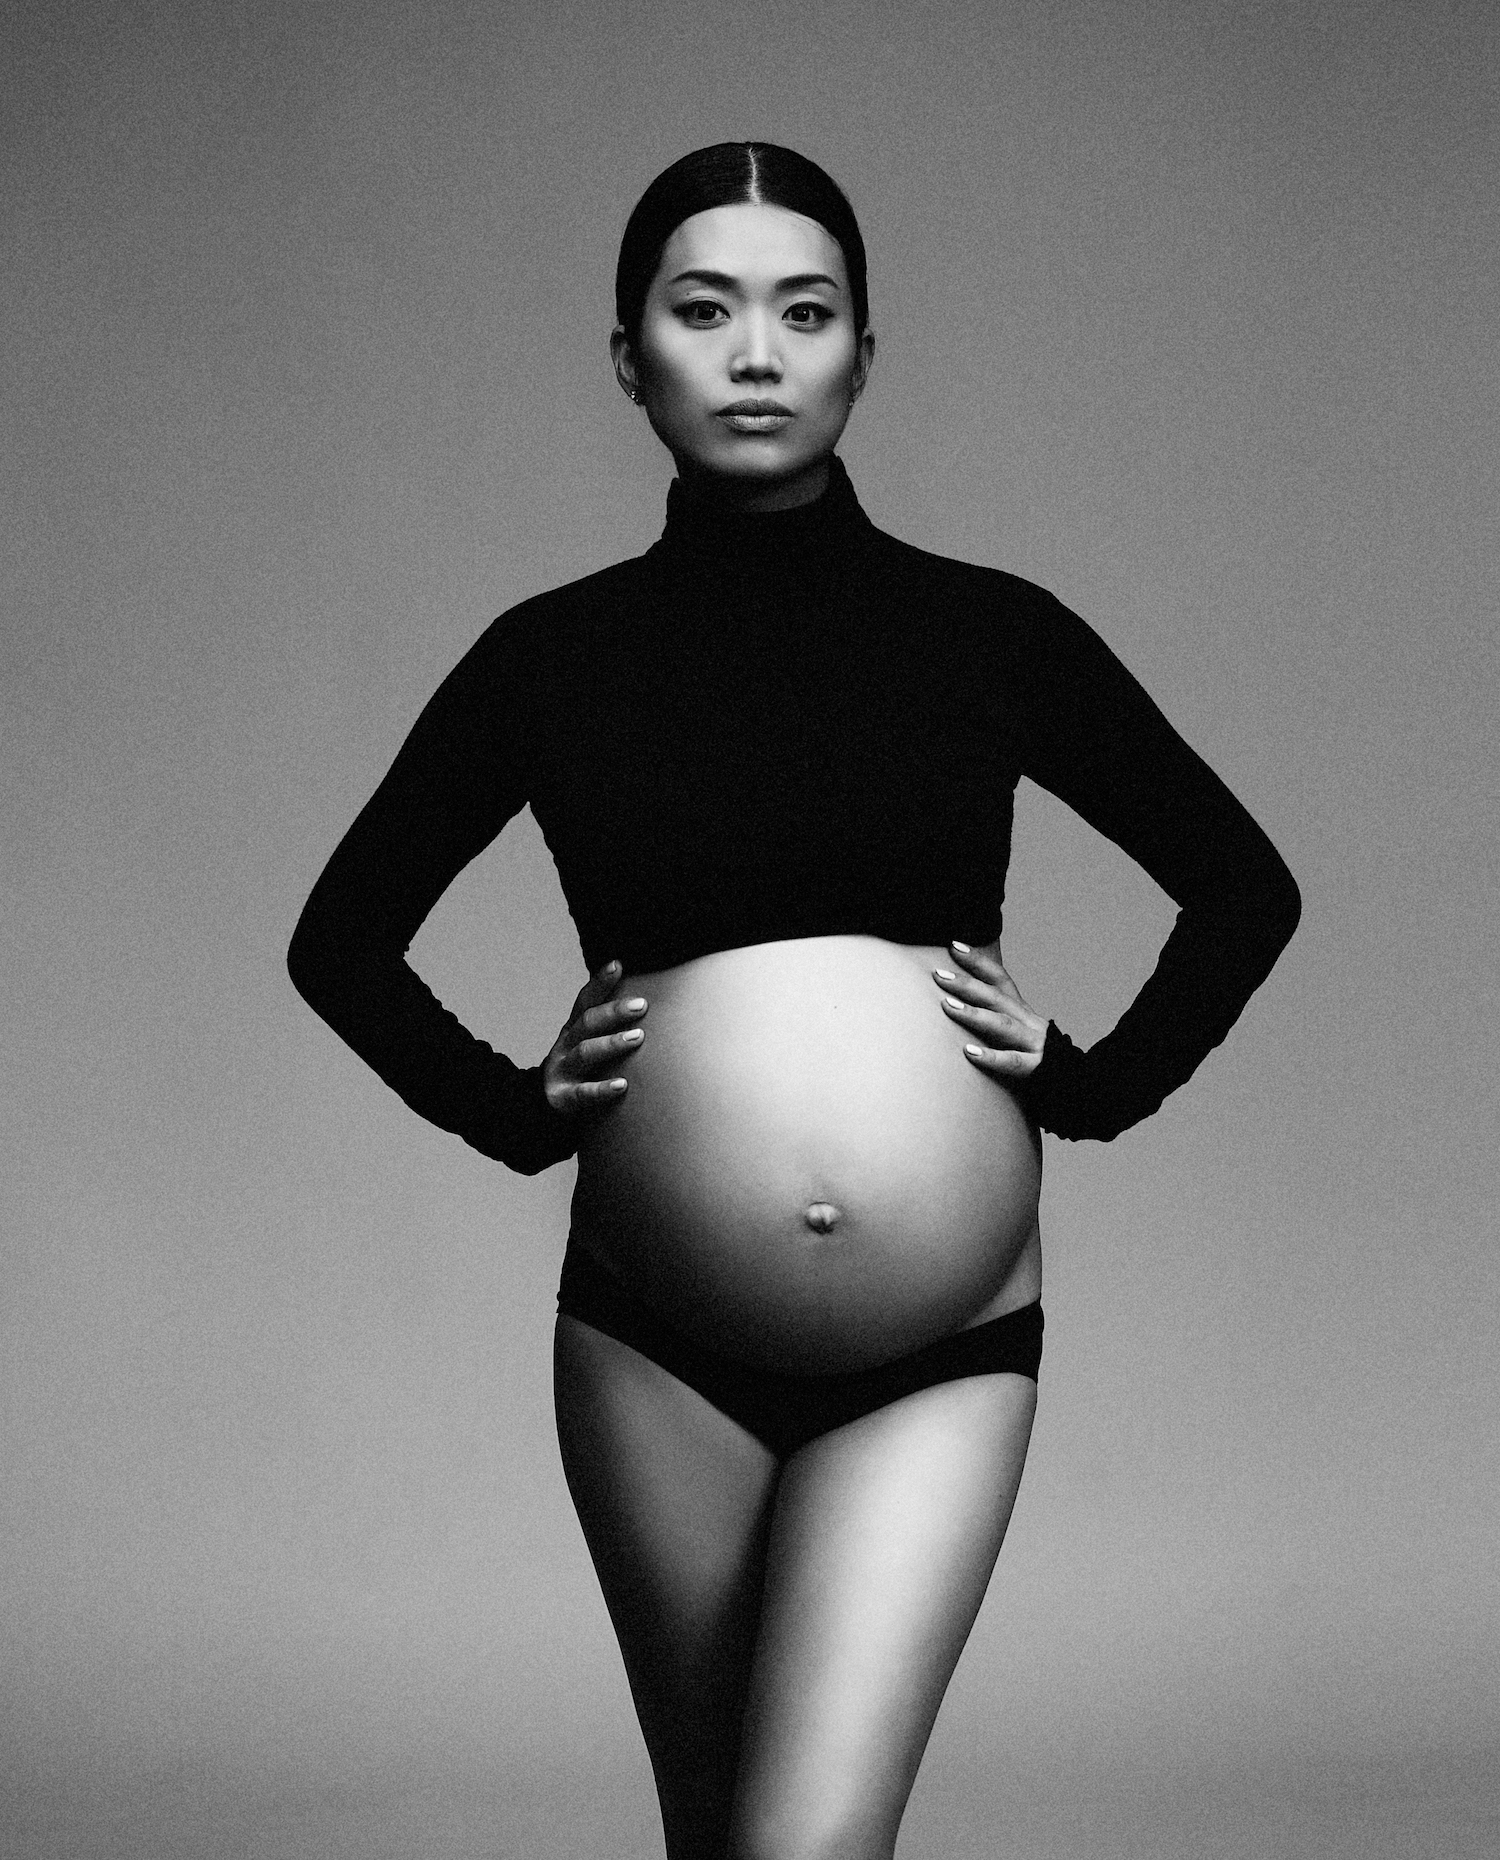 NYC maternity and newborn photography studio. Editorial pregnancy portraits by Lola Melani